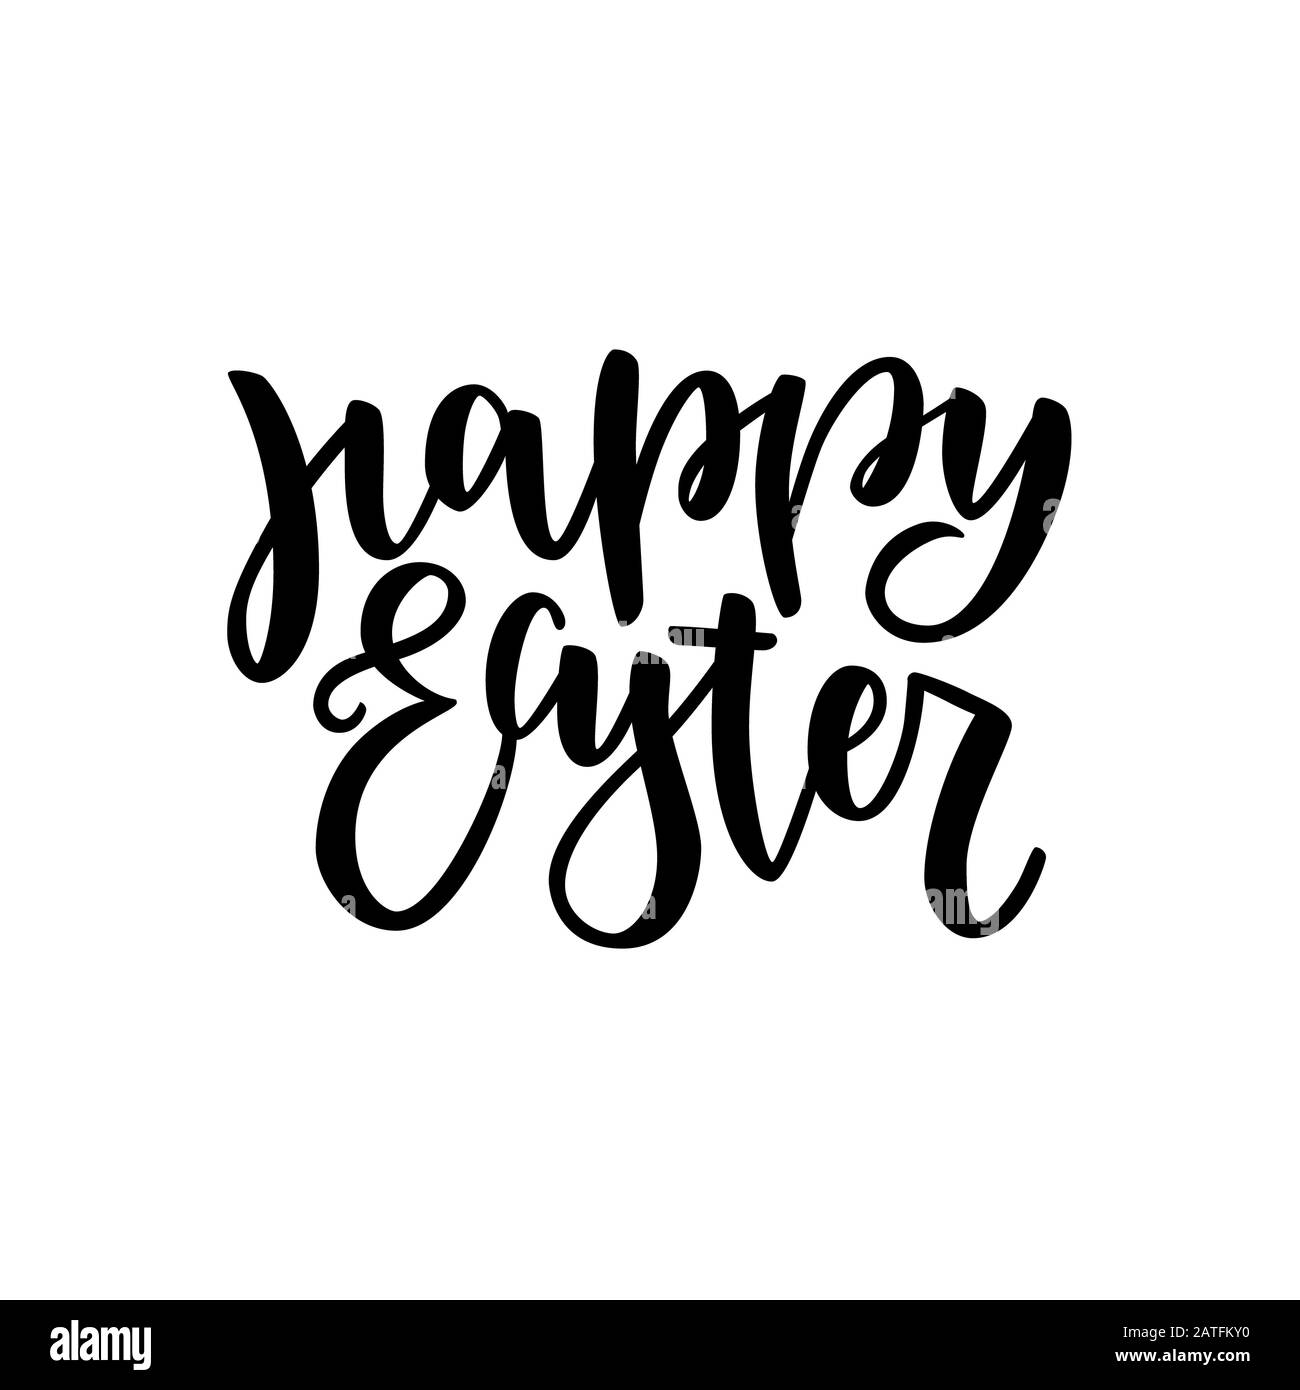 Happy Easter lettering for greeting card.  illustration isolated on white background. Modern black brush ink handlettering. Stock Photo